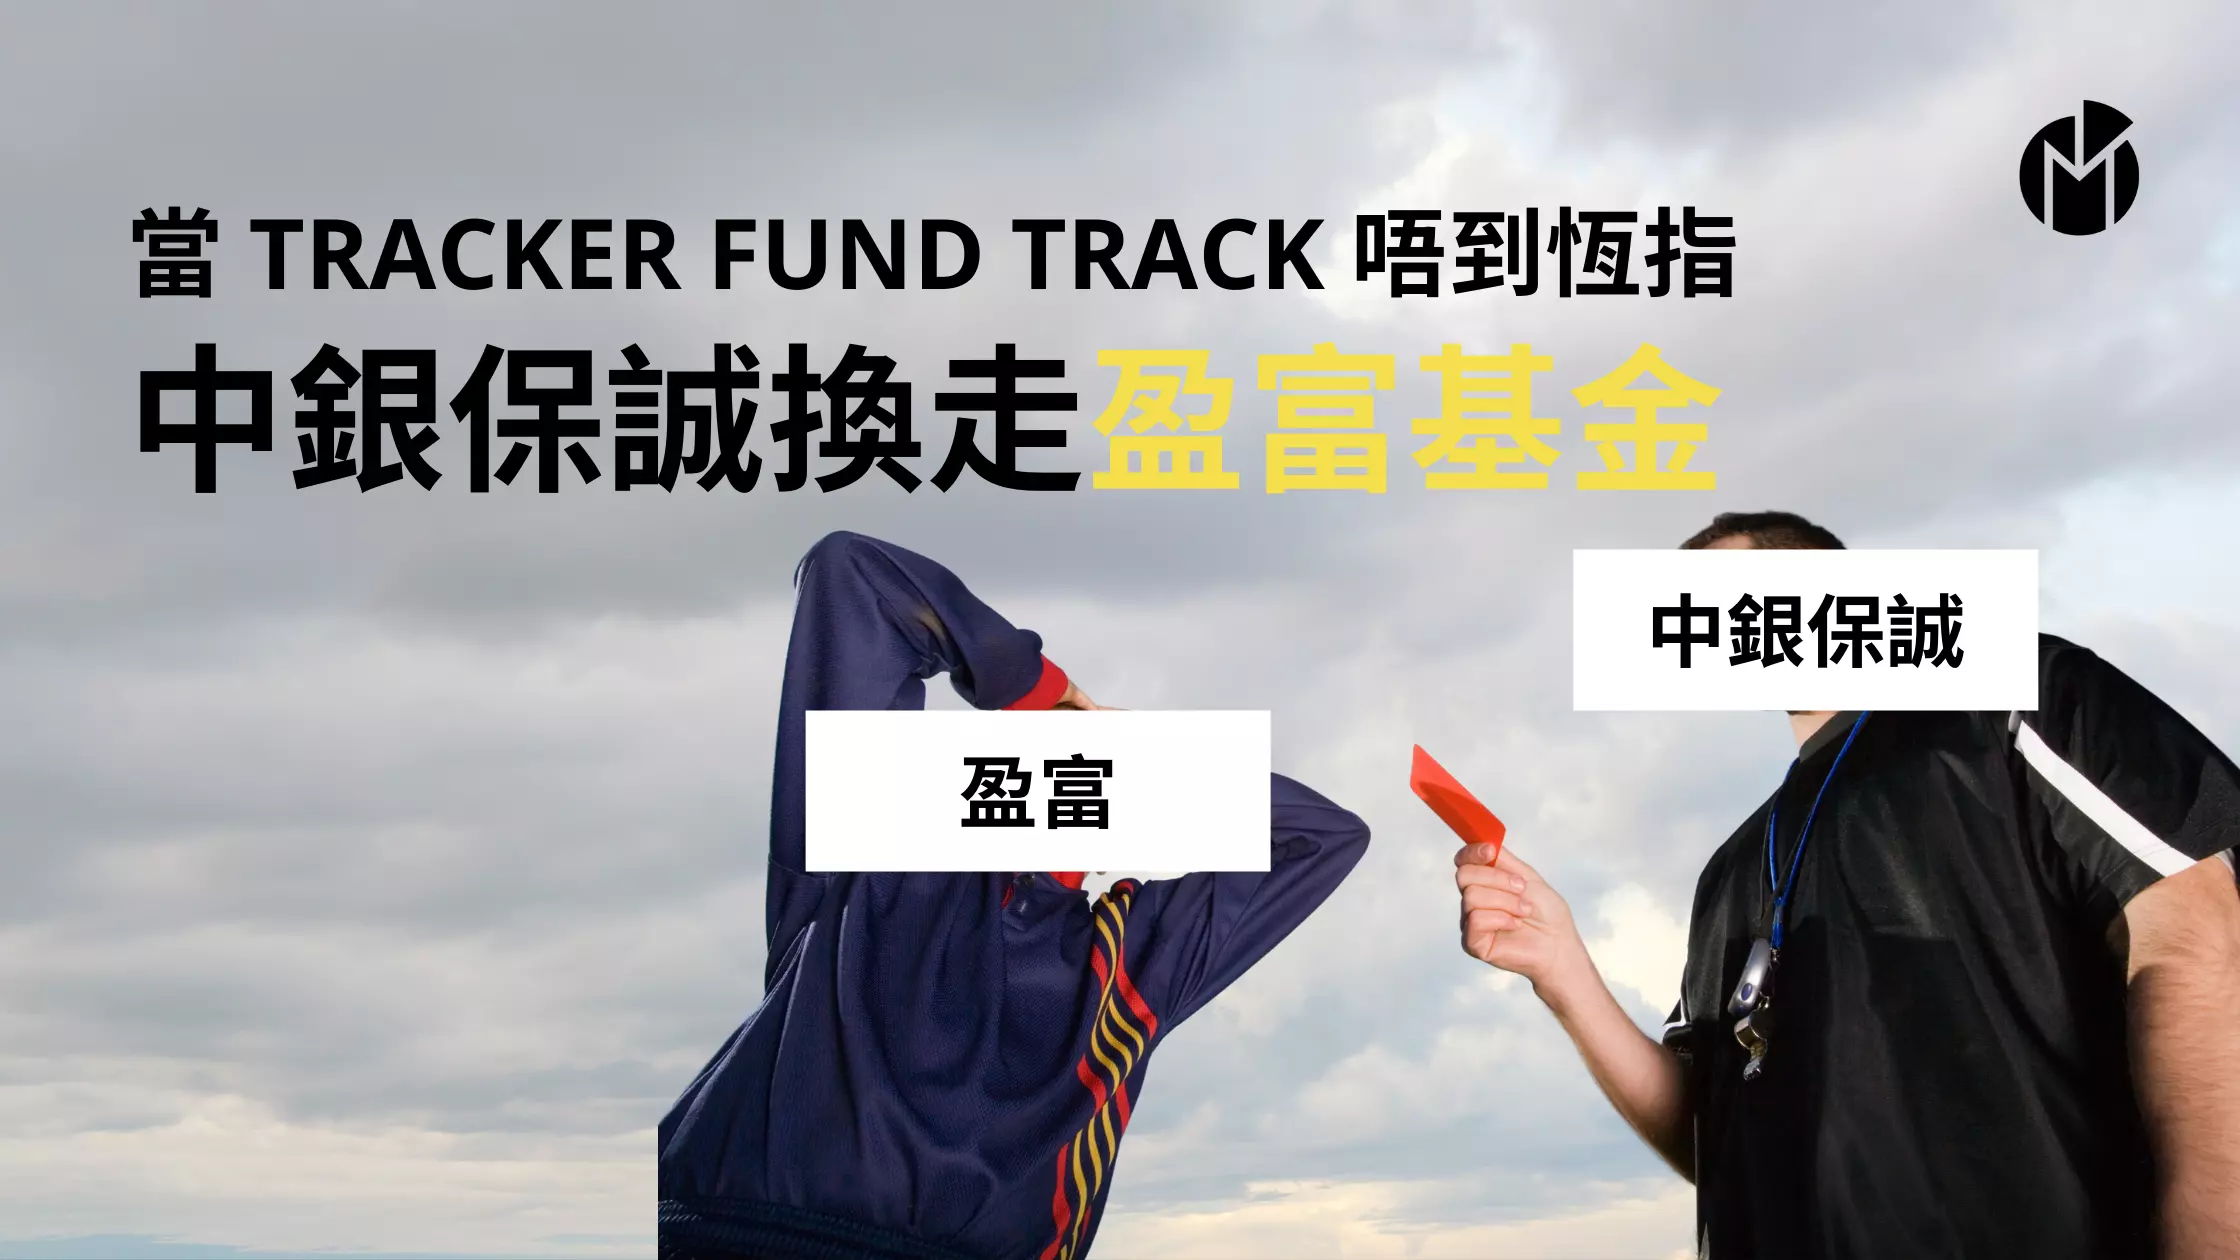 Bank of China Prudential removed 2800 as the Hong Kong tracker MPF